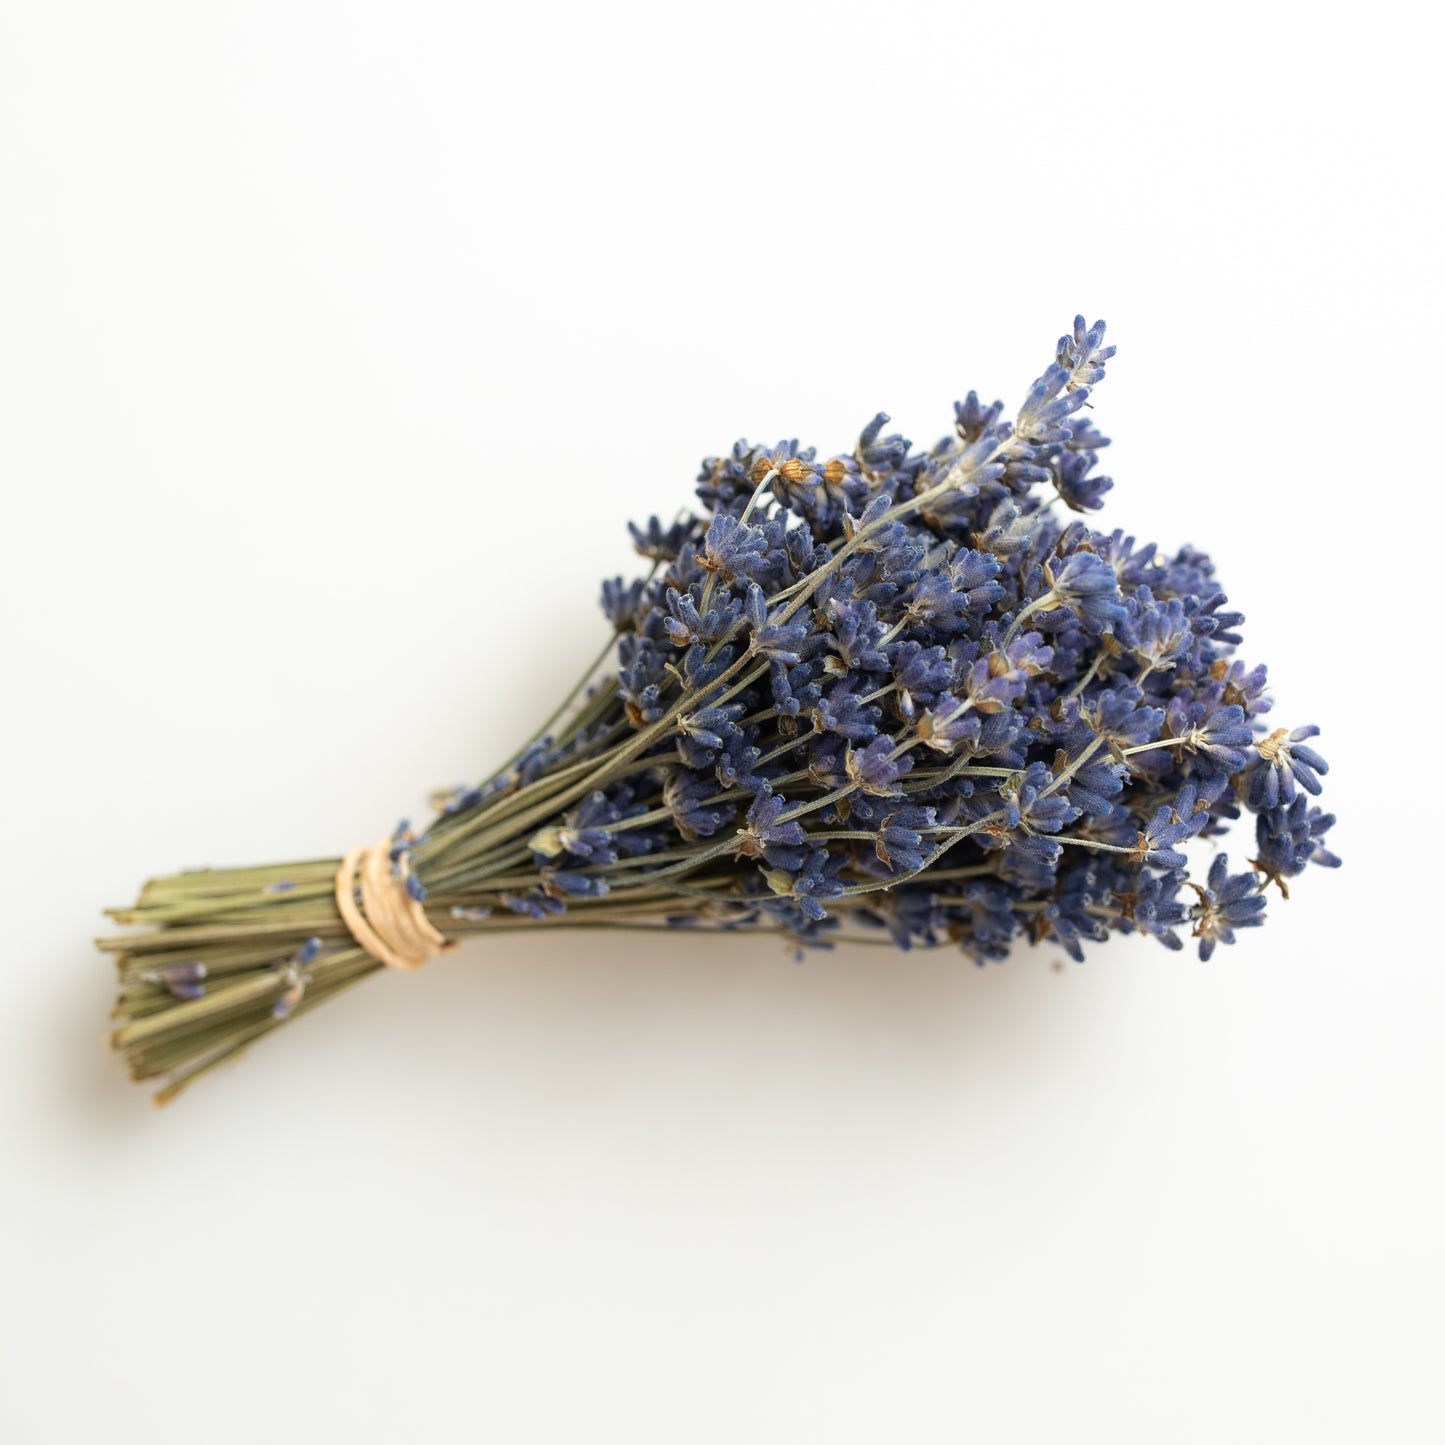 Dried organic Munstead lavender bouquet